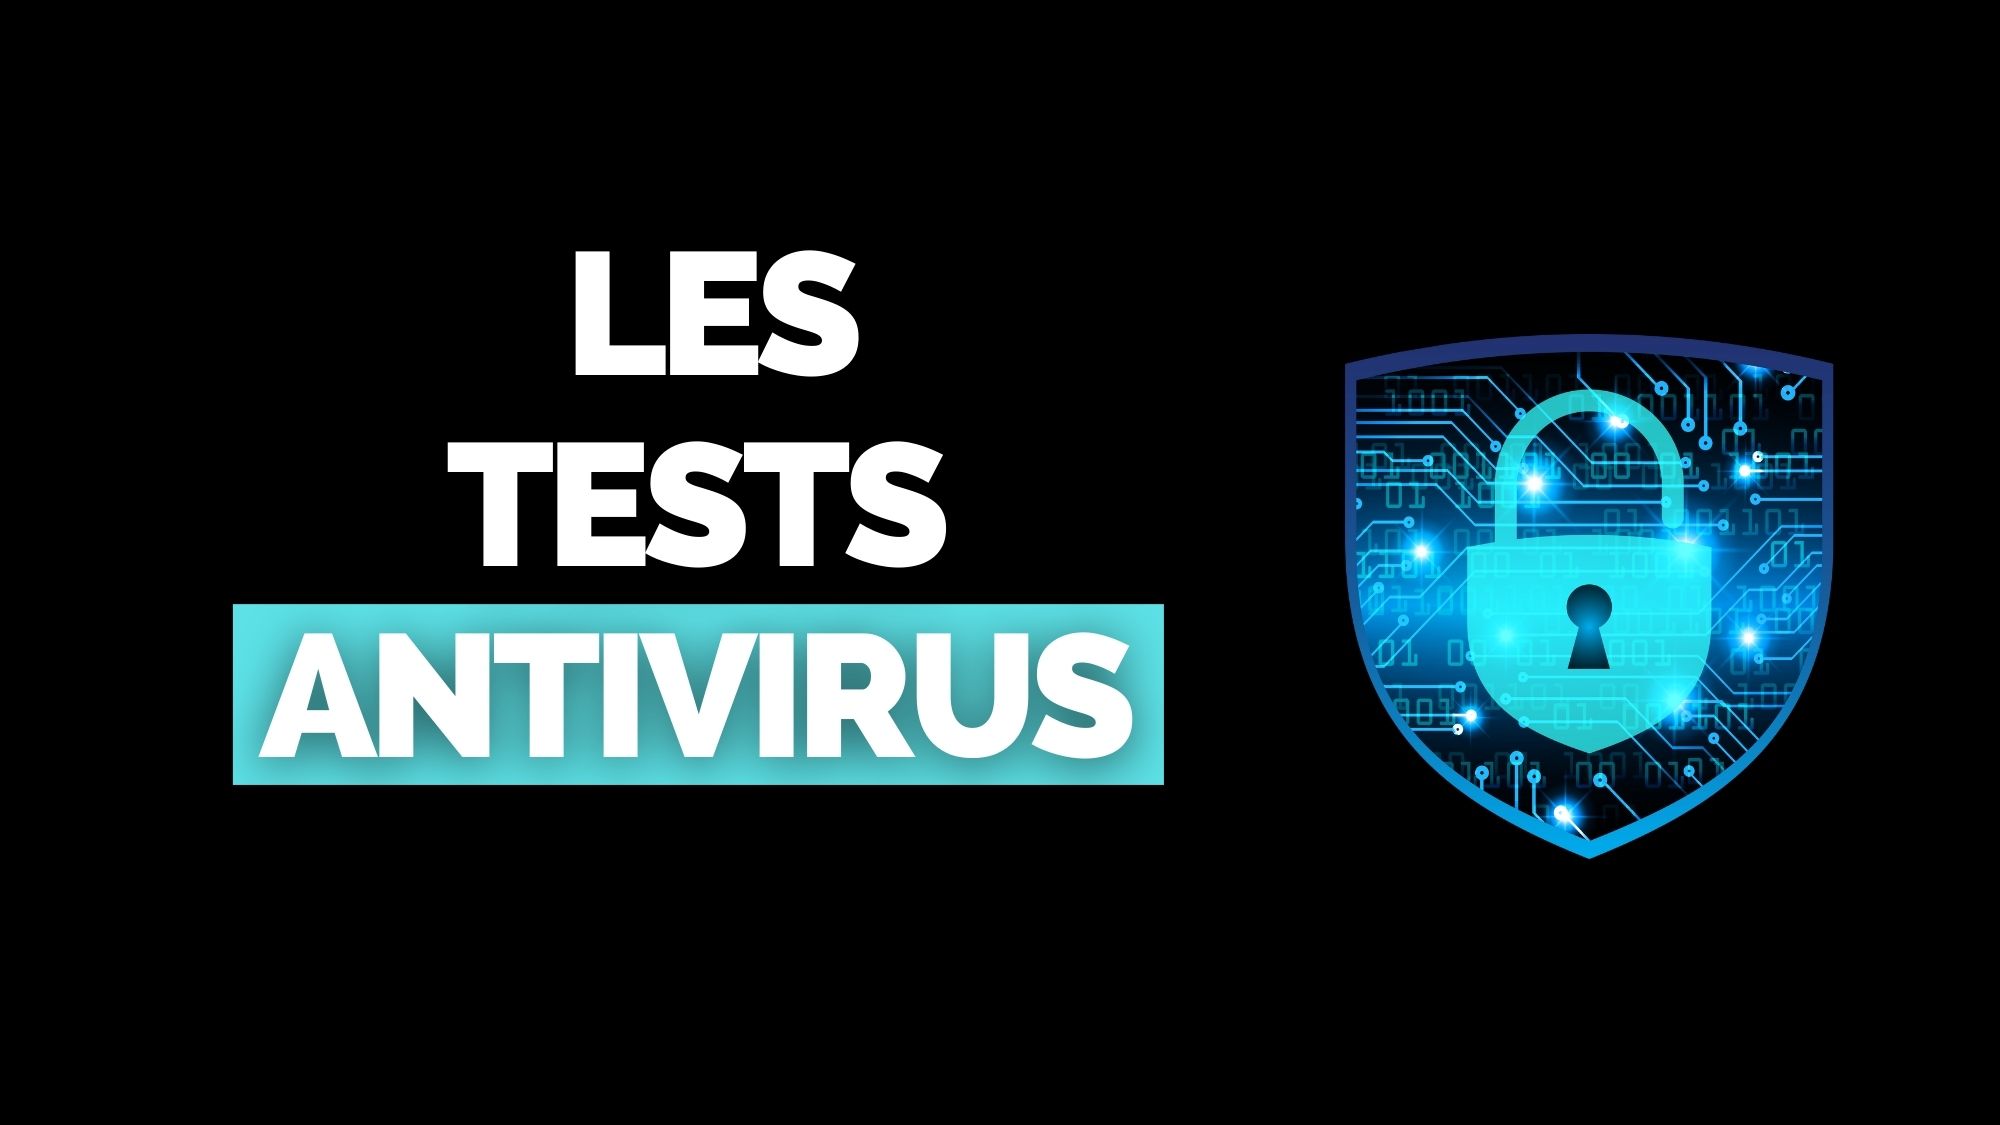 Les tests antivirus